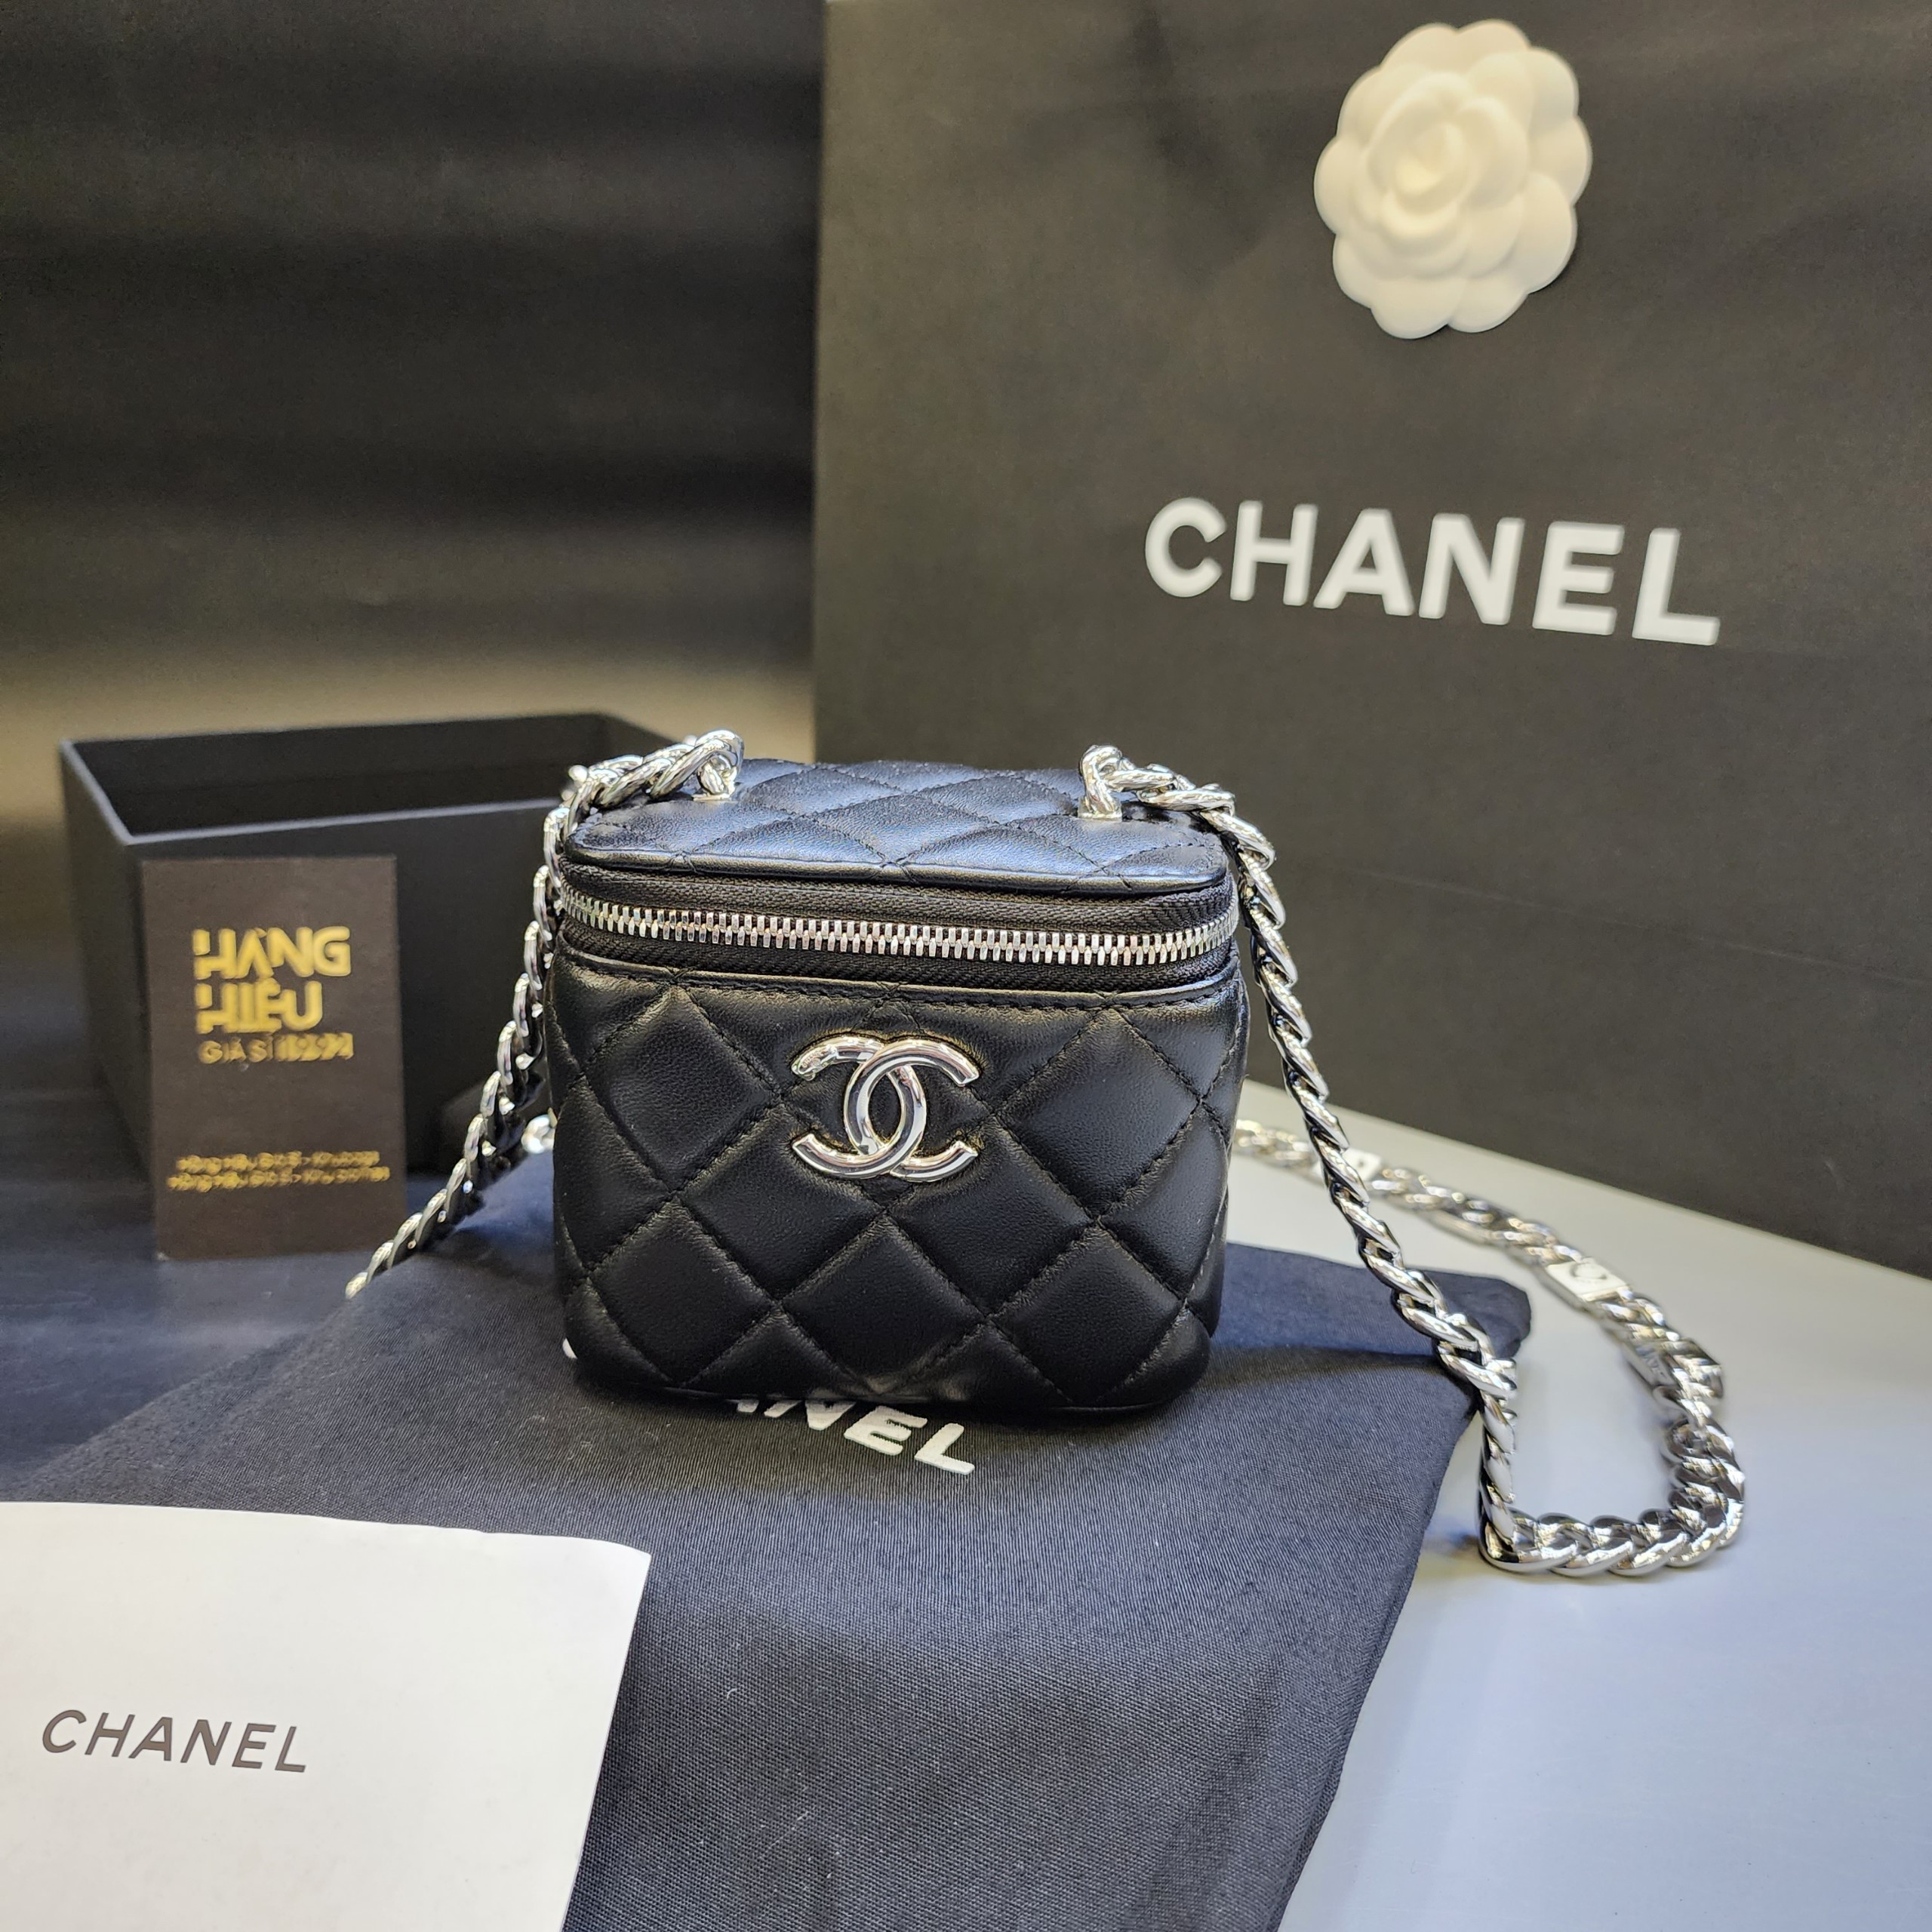 CHANEL Caviar Skin Leather Black Cosmetic Case Vanity Box Handbag 2417  Riseon  eBay